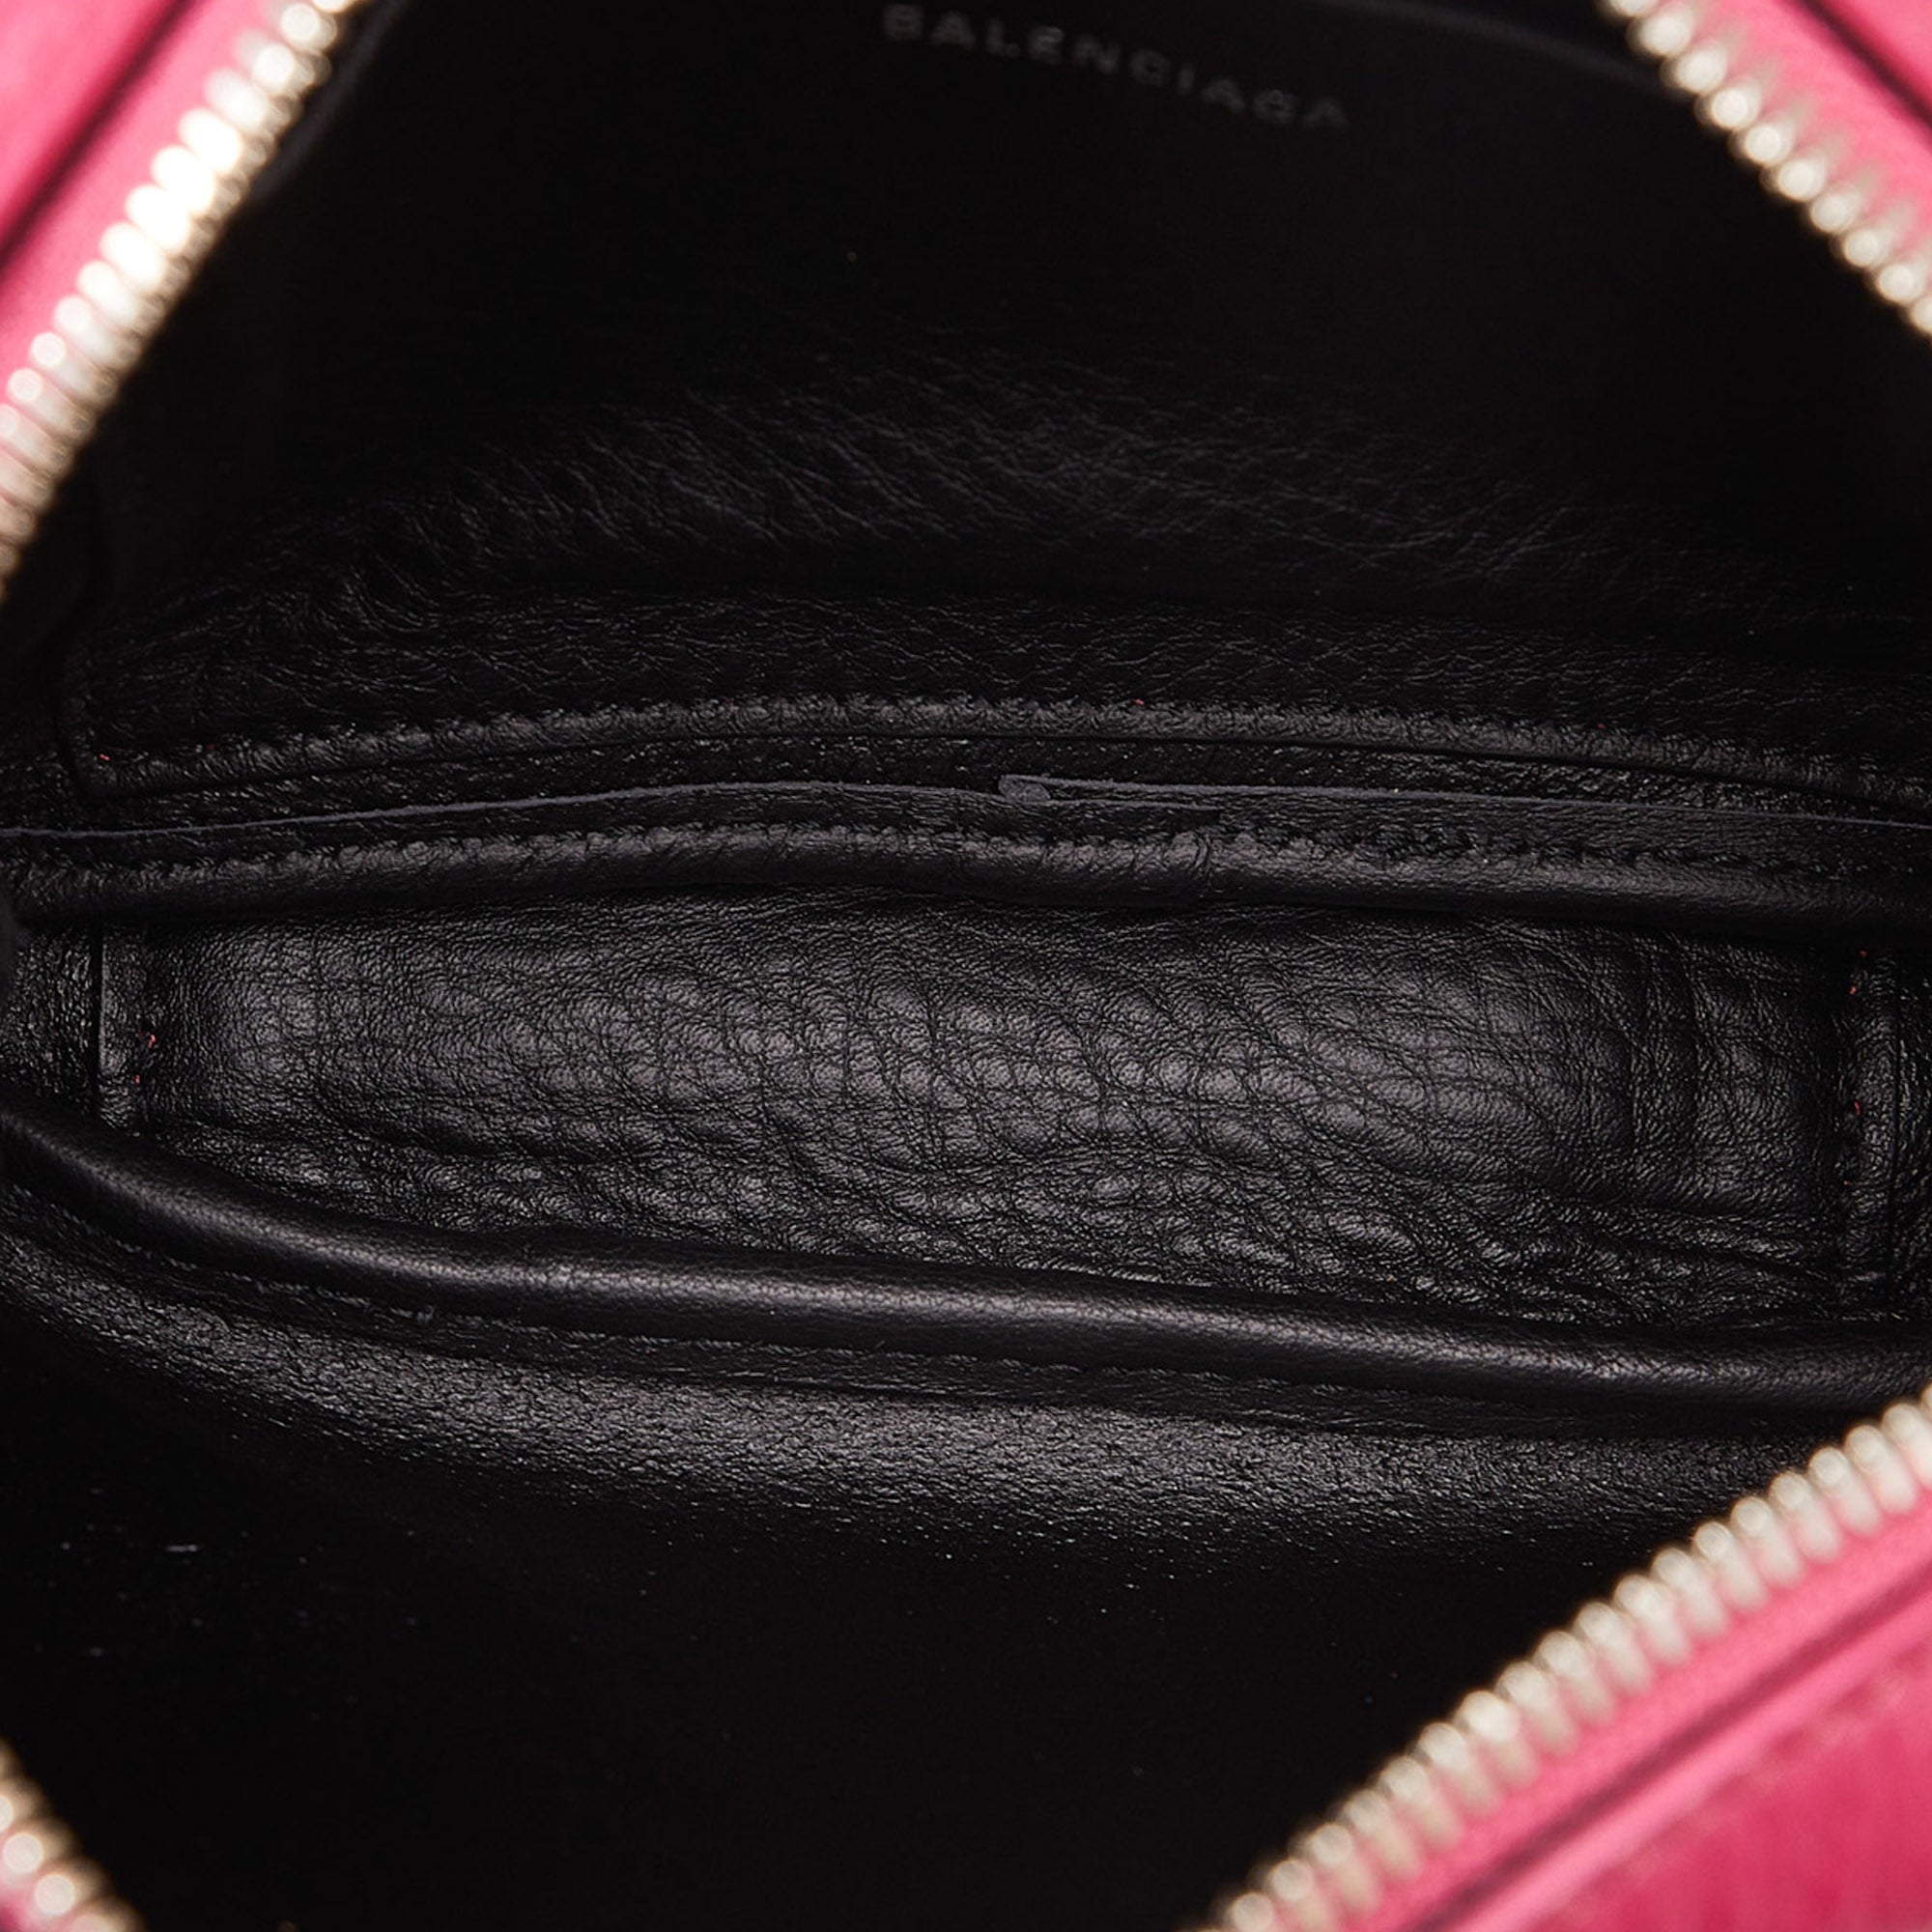 Balenciaga XS Ville Camera Bag - Pink Crossbody Bags, Handbags